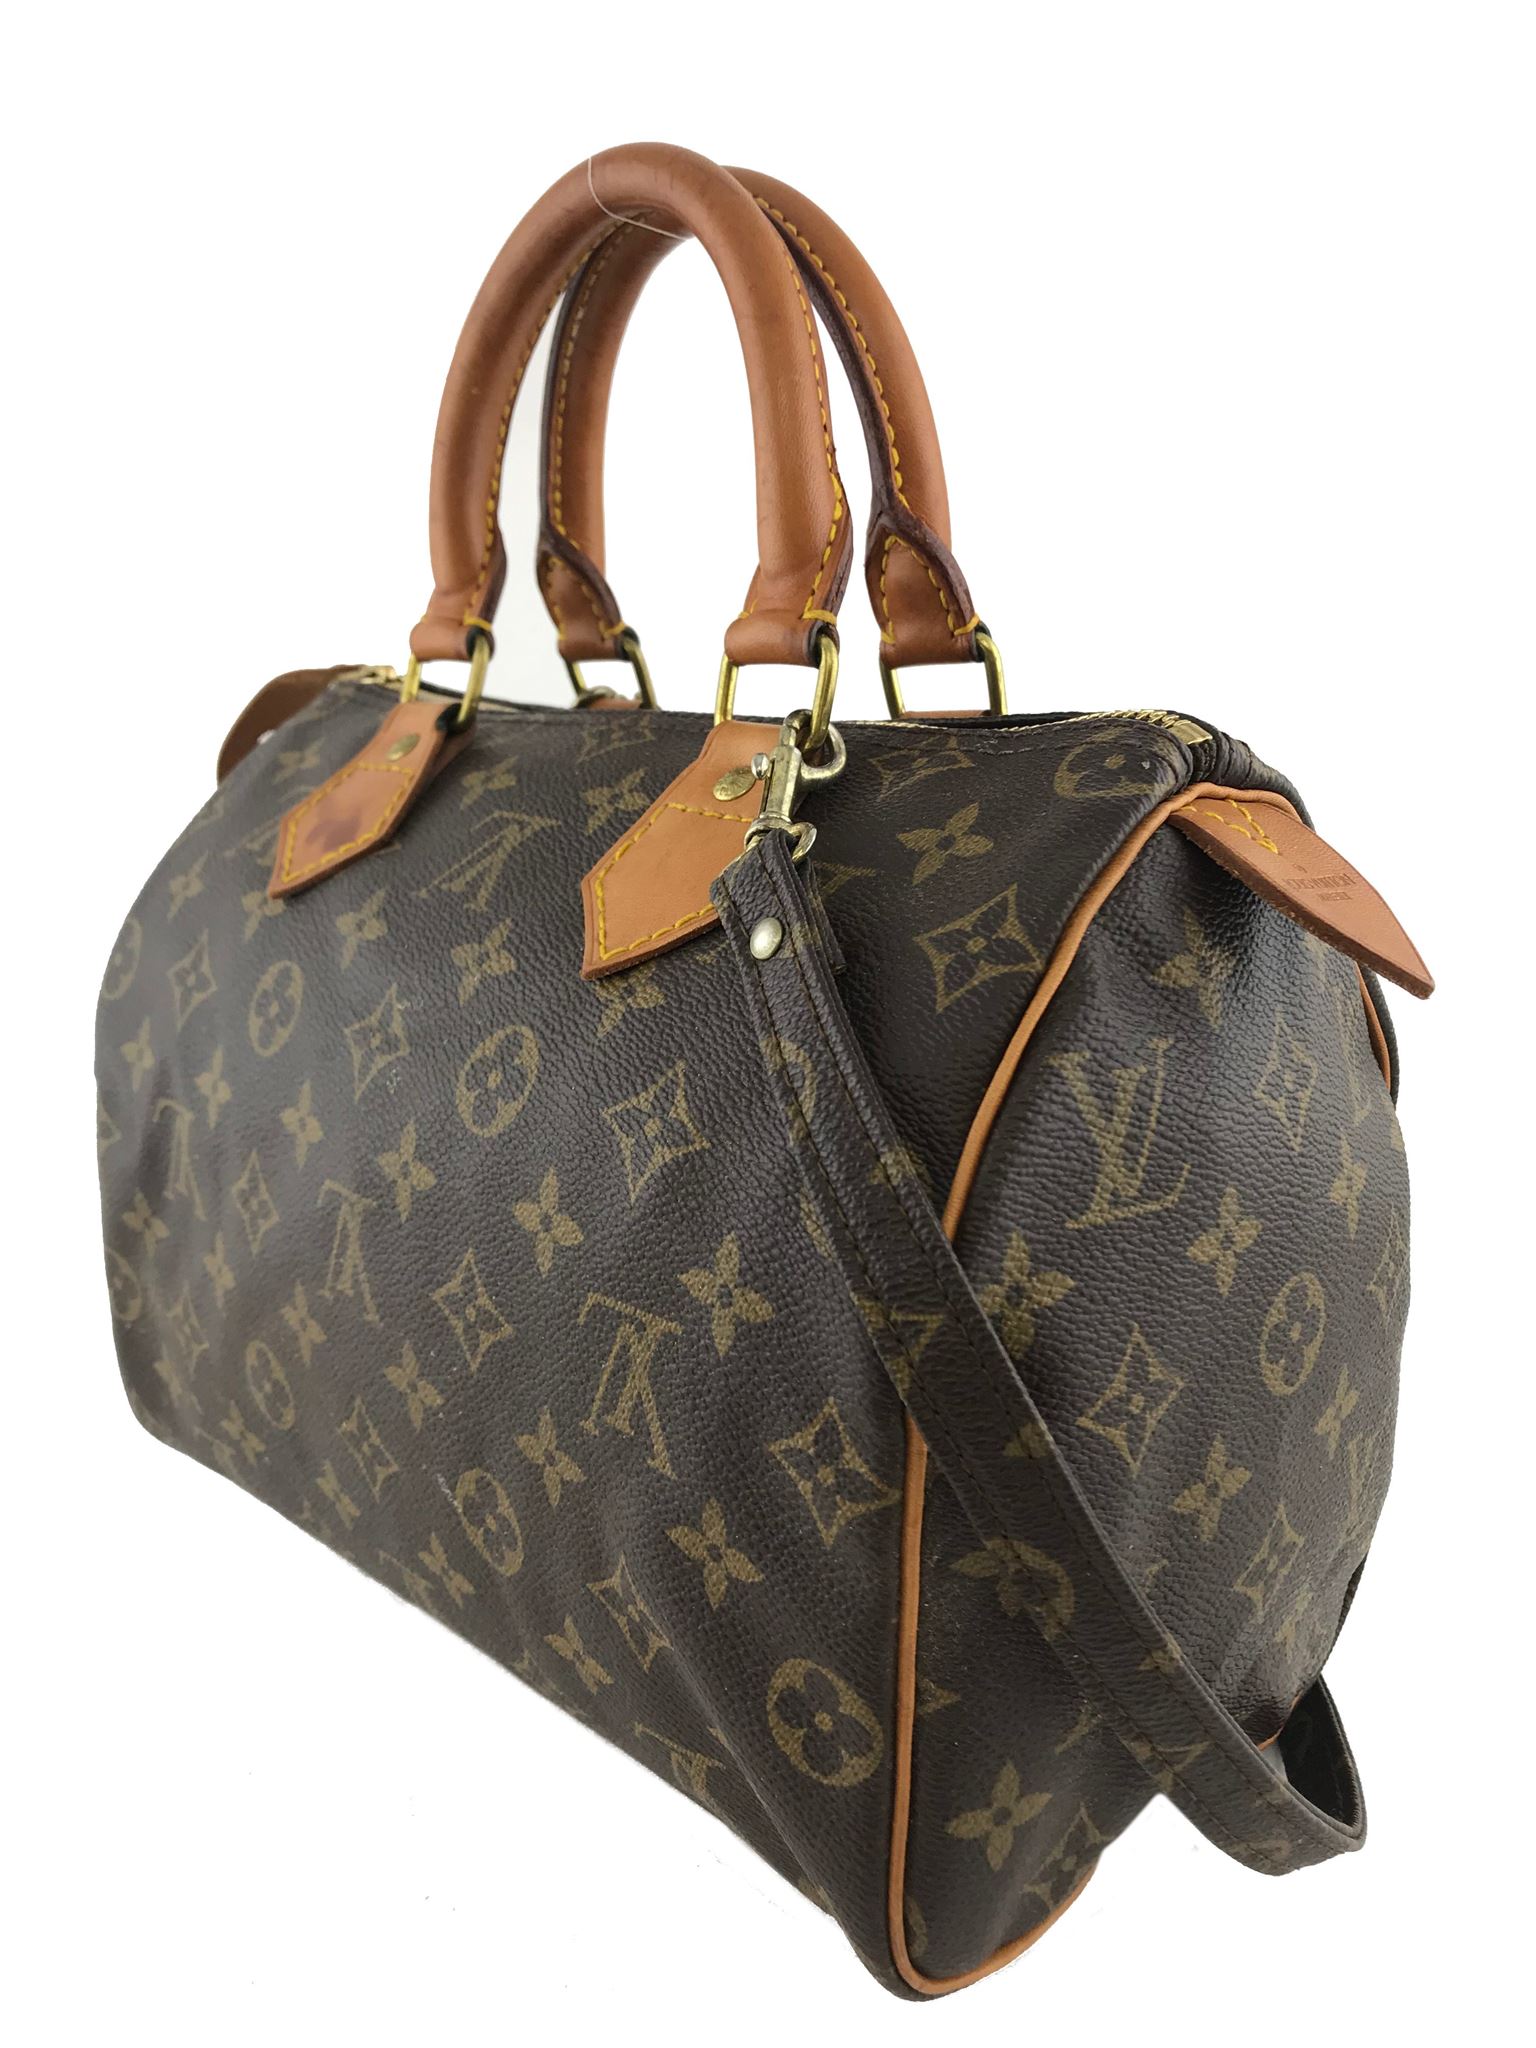 Louis Vuitton Monogram Speedy Bandouliere 25 Bag | eBay